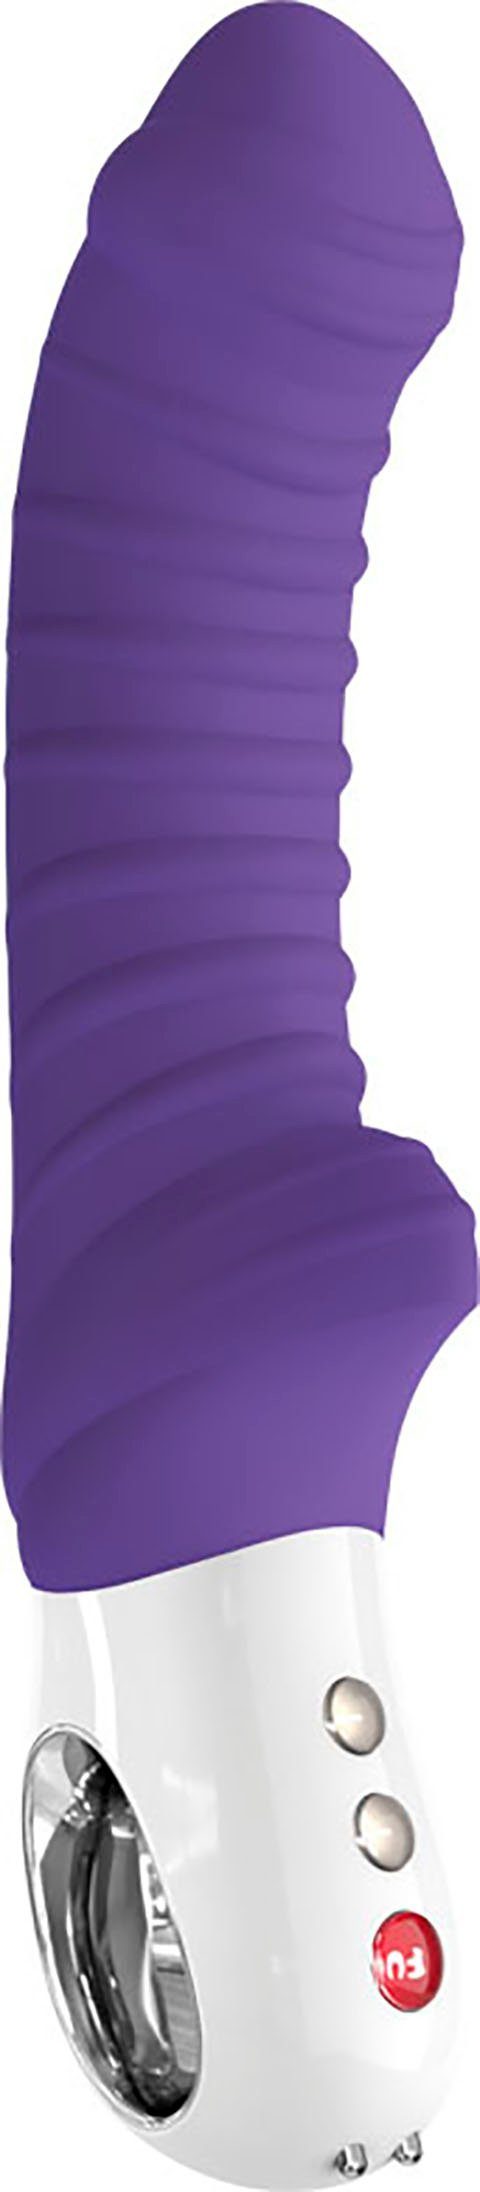 violett Fun TIGER Vibrator Factory